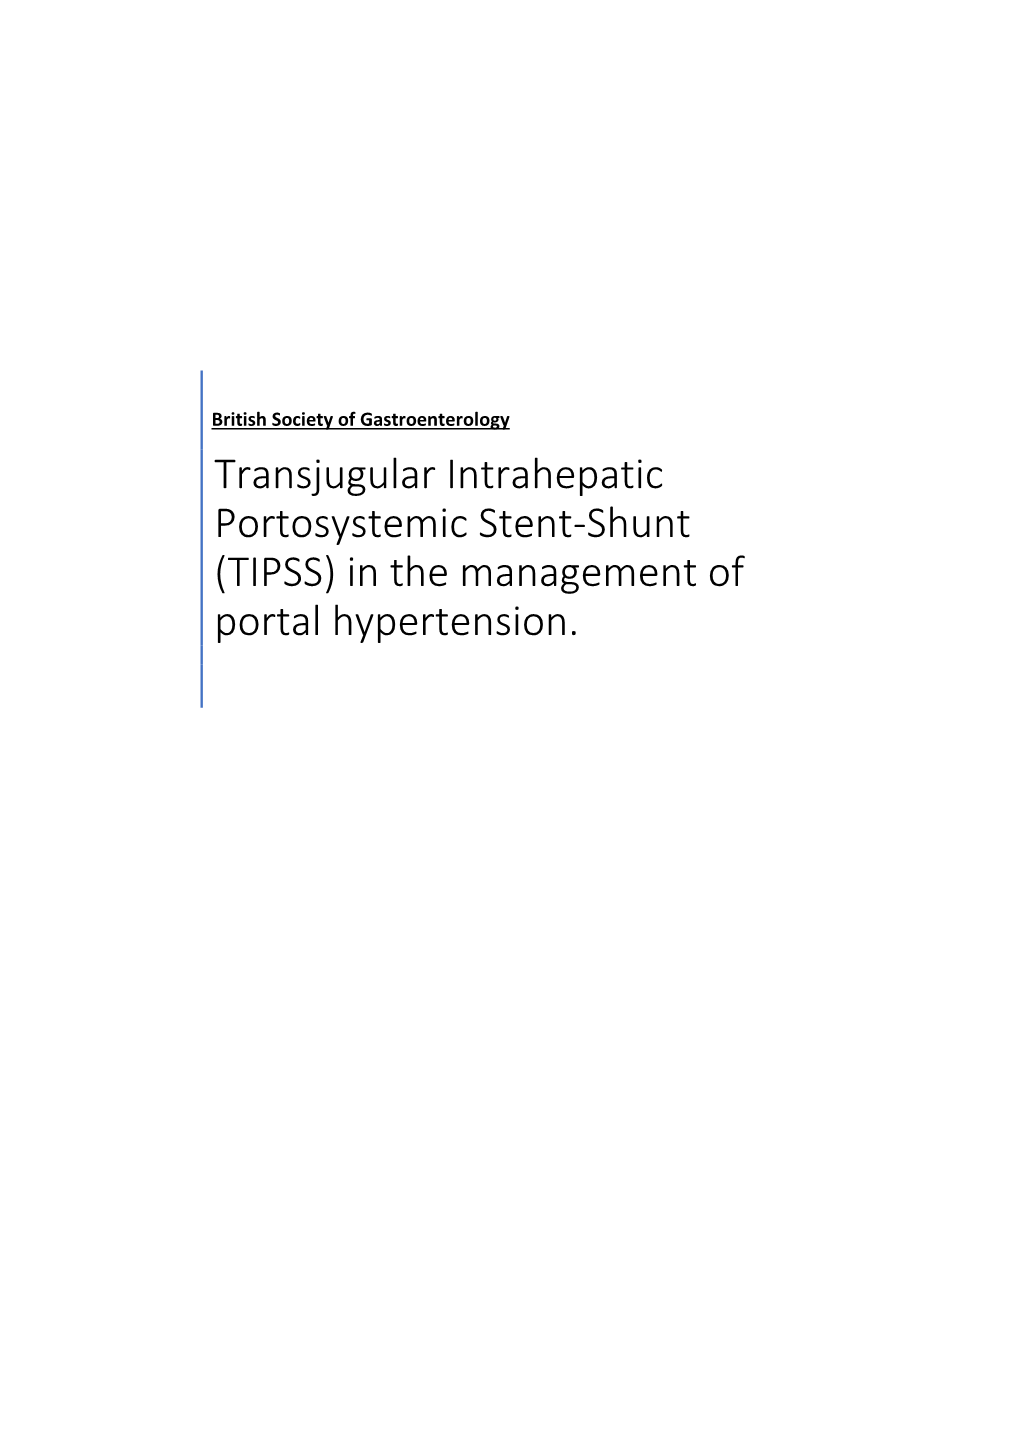 Transjugular Intrahepatic Portosystemic Stent-Shunt (TIPSS) in the Management of Portal Hypertension